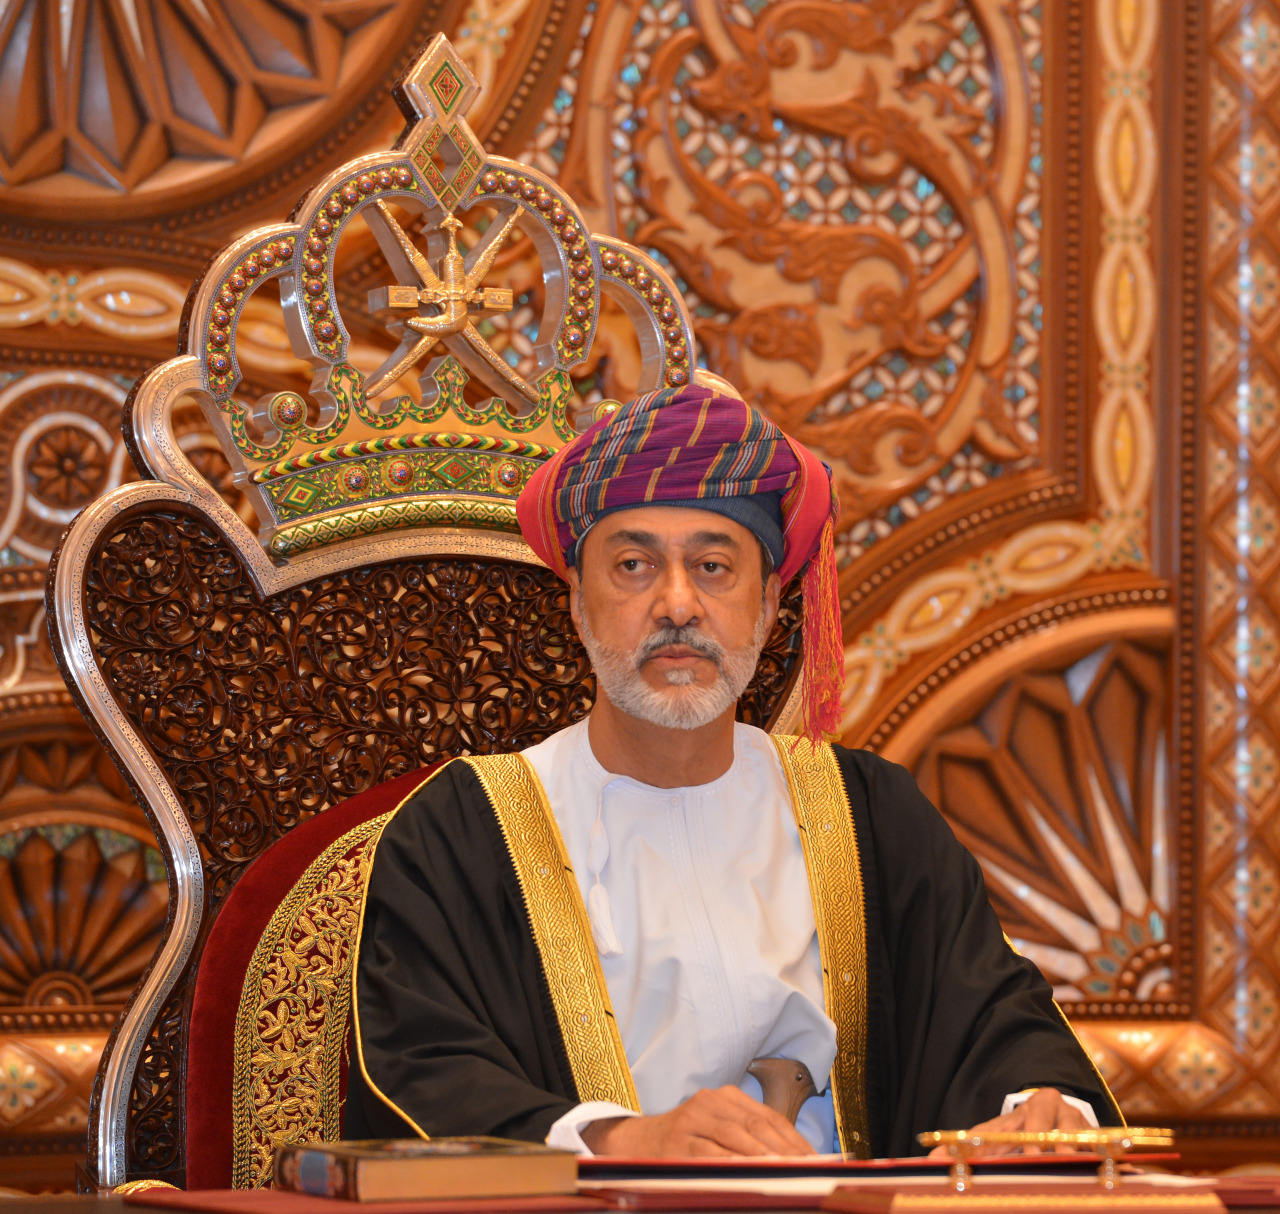 His Majesty Haitham bin Tariq, sultan of Oman